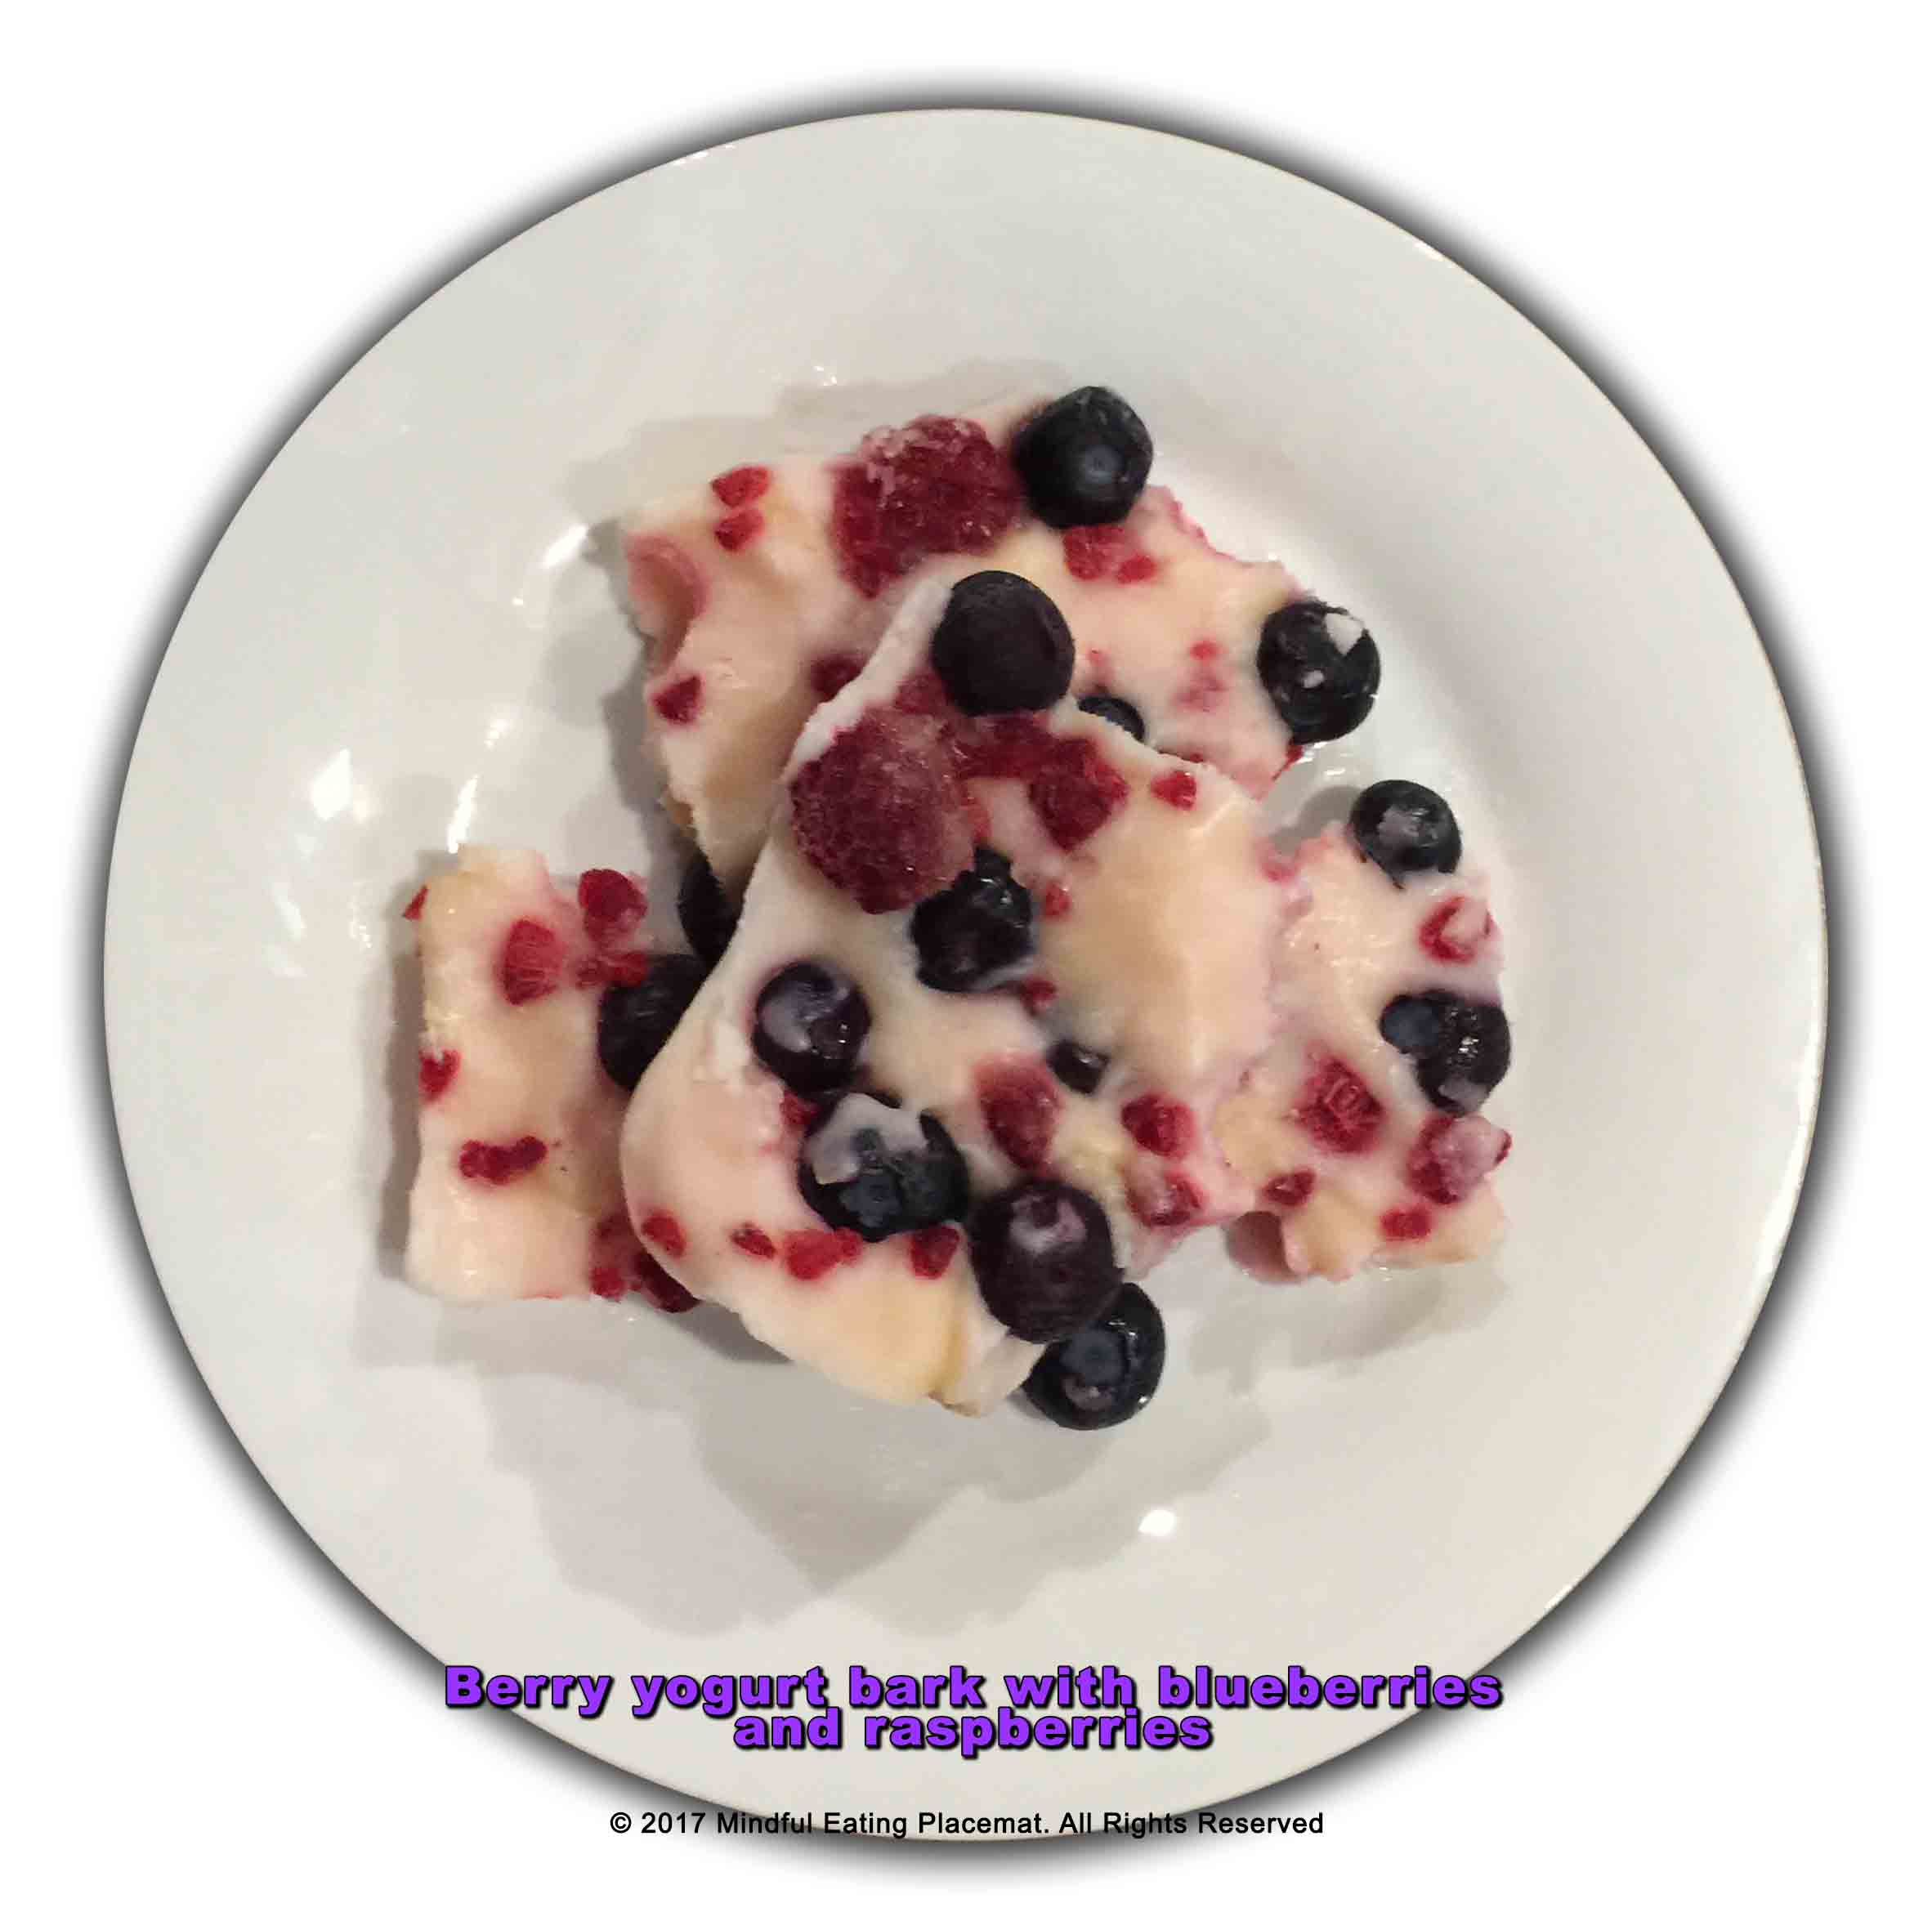 Yogurt bark with blueberries and raspberries